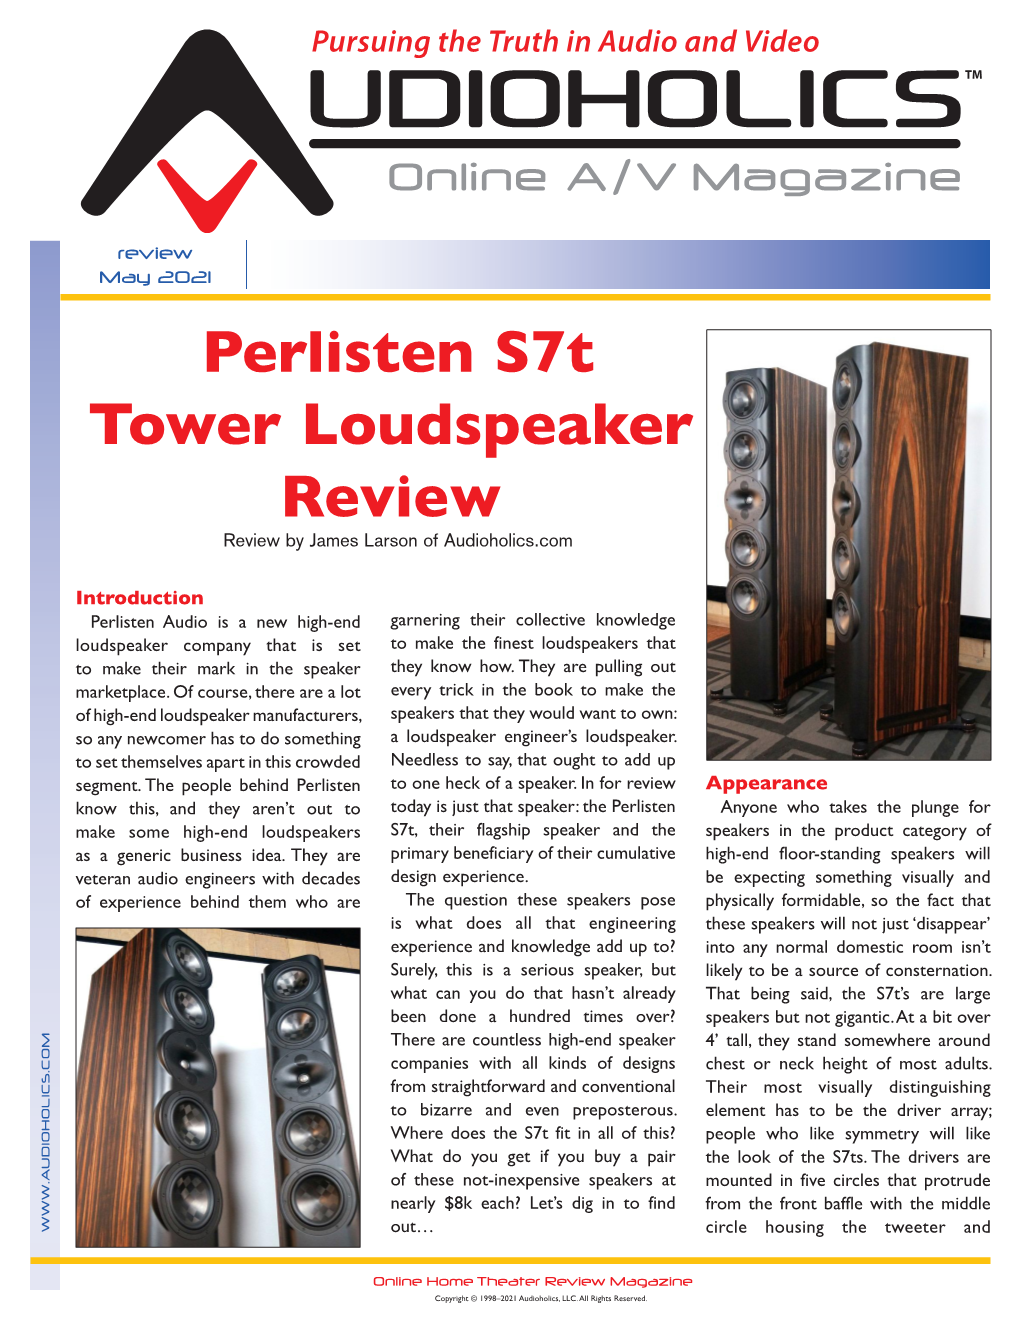 Perlisten S7t Tower Loudspeaker Review